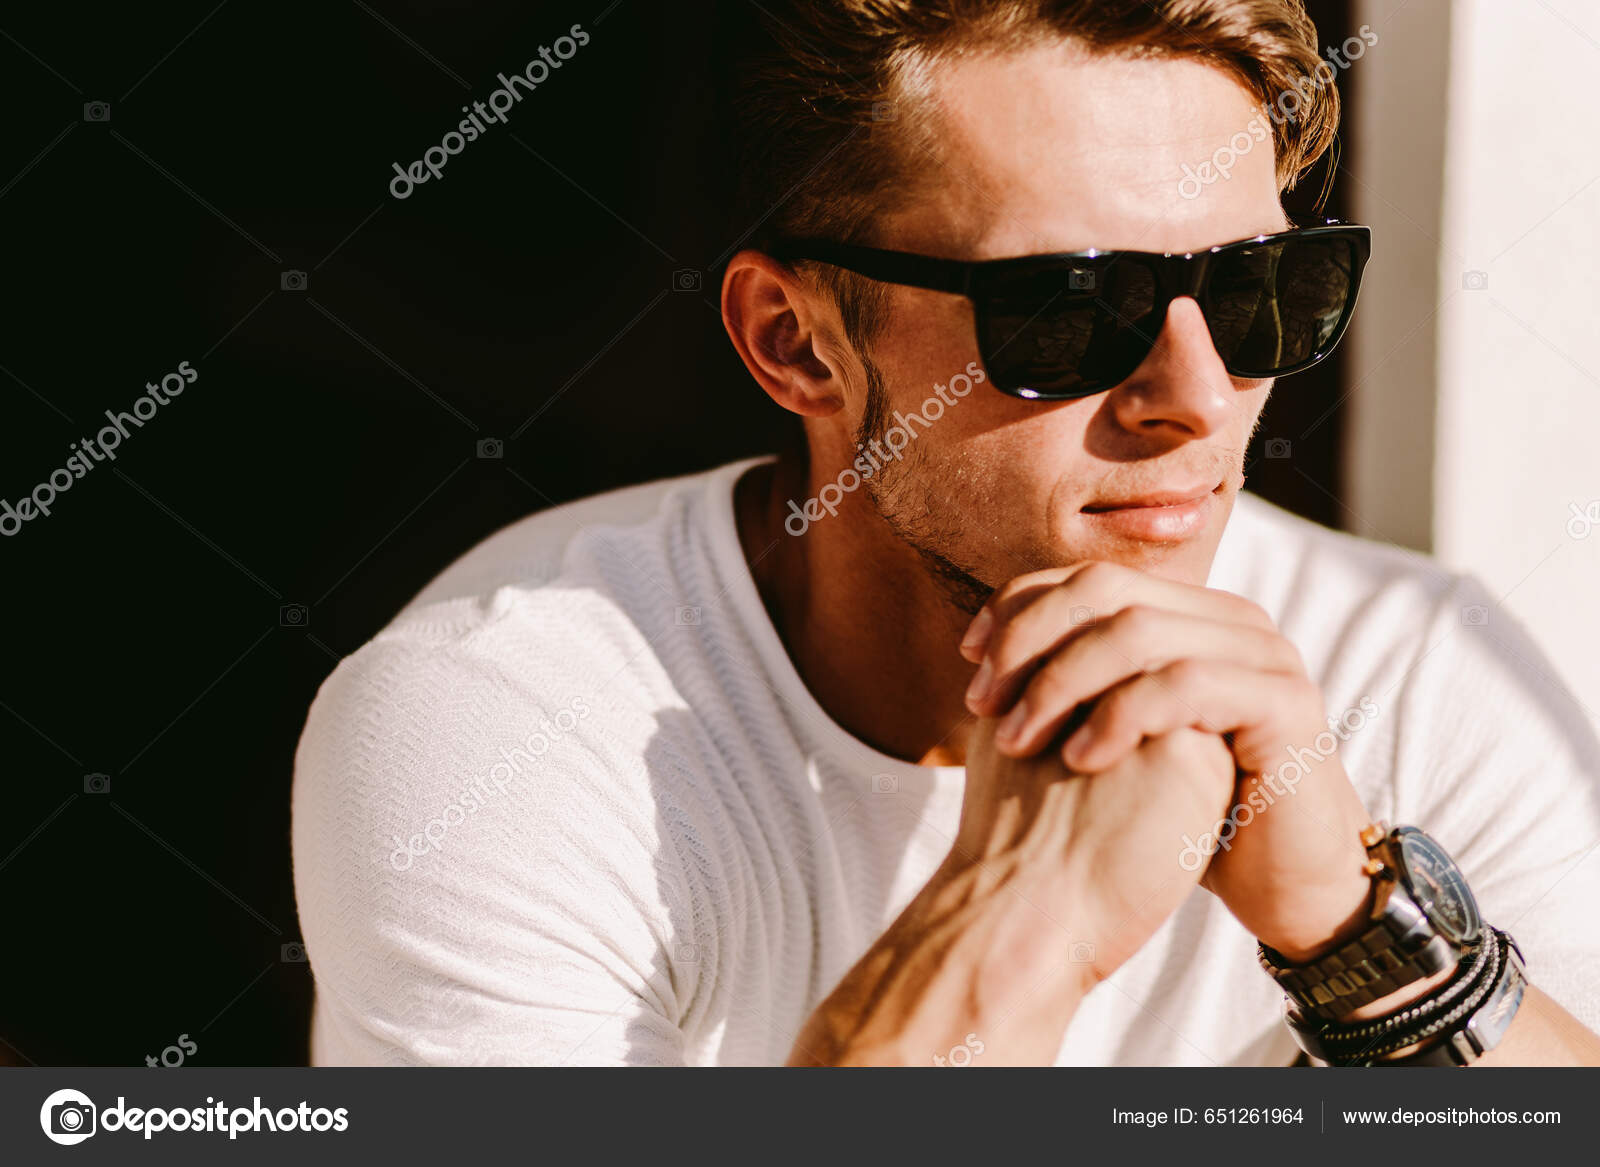 https://st5.depositphotos.com/4366957/65126/i/1600/depositphotos_651261964-stock-photo-portrait-brutal-man-sunglasses-watch.jpg